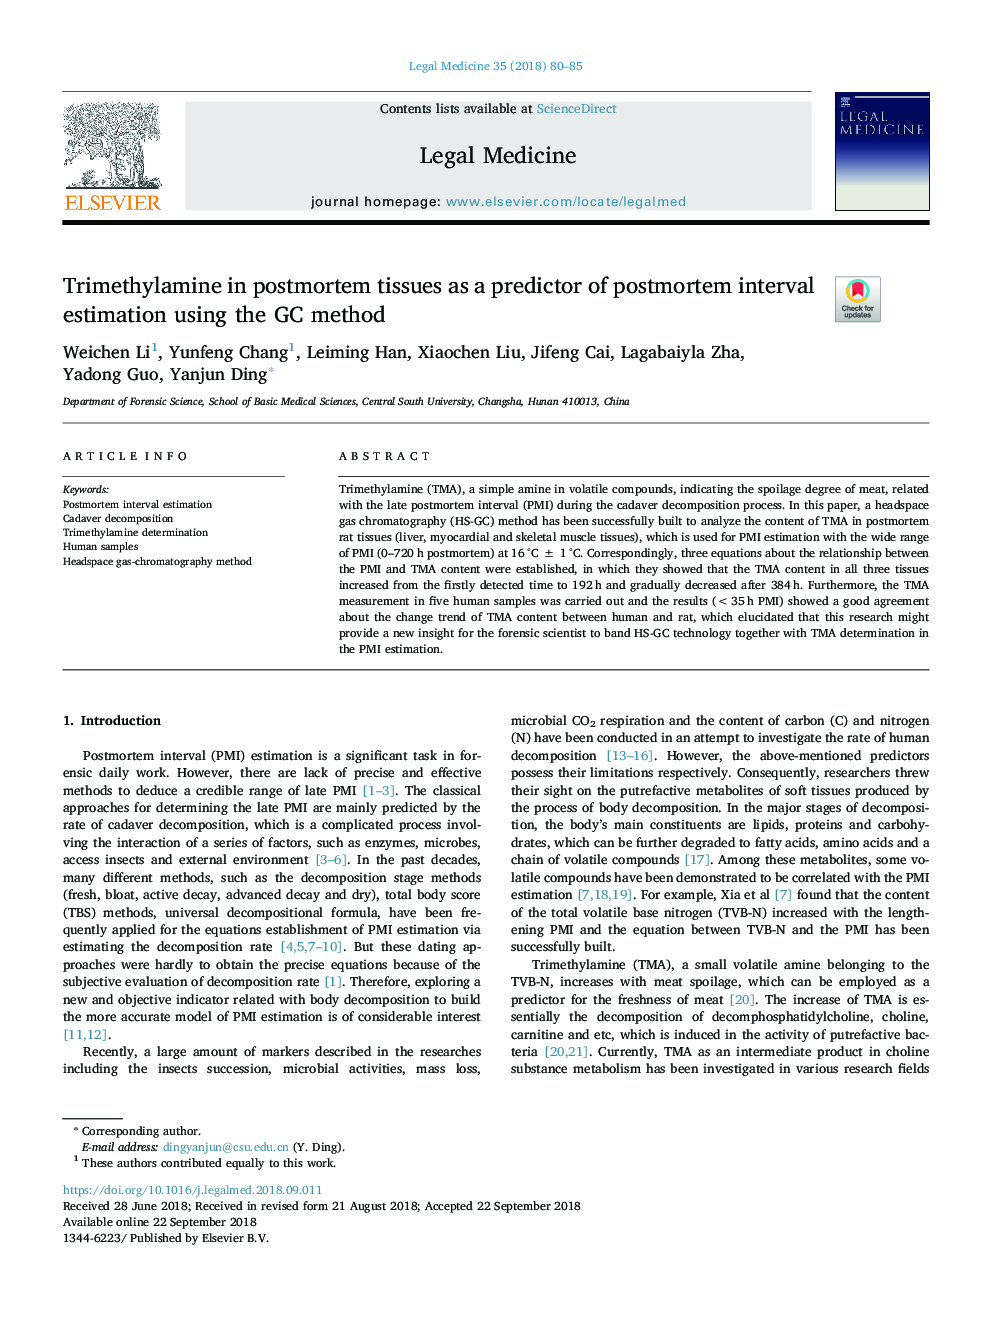 Trimethylamine in postmortem tissues as a predictor of postmortem interval estimation using the GC method